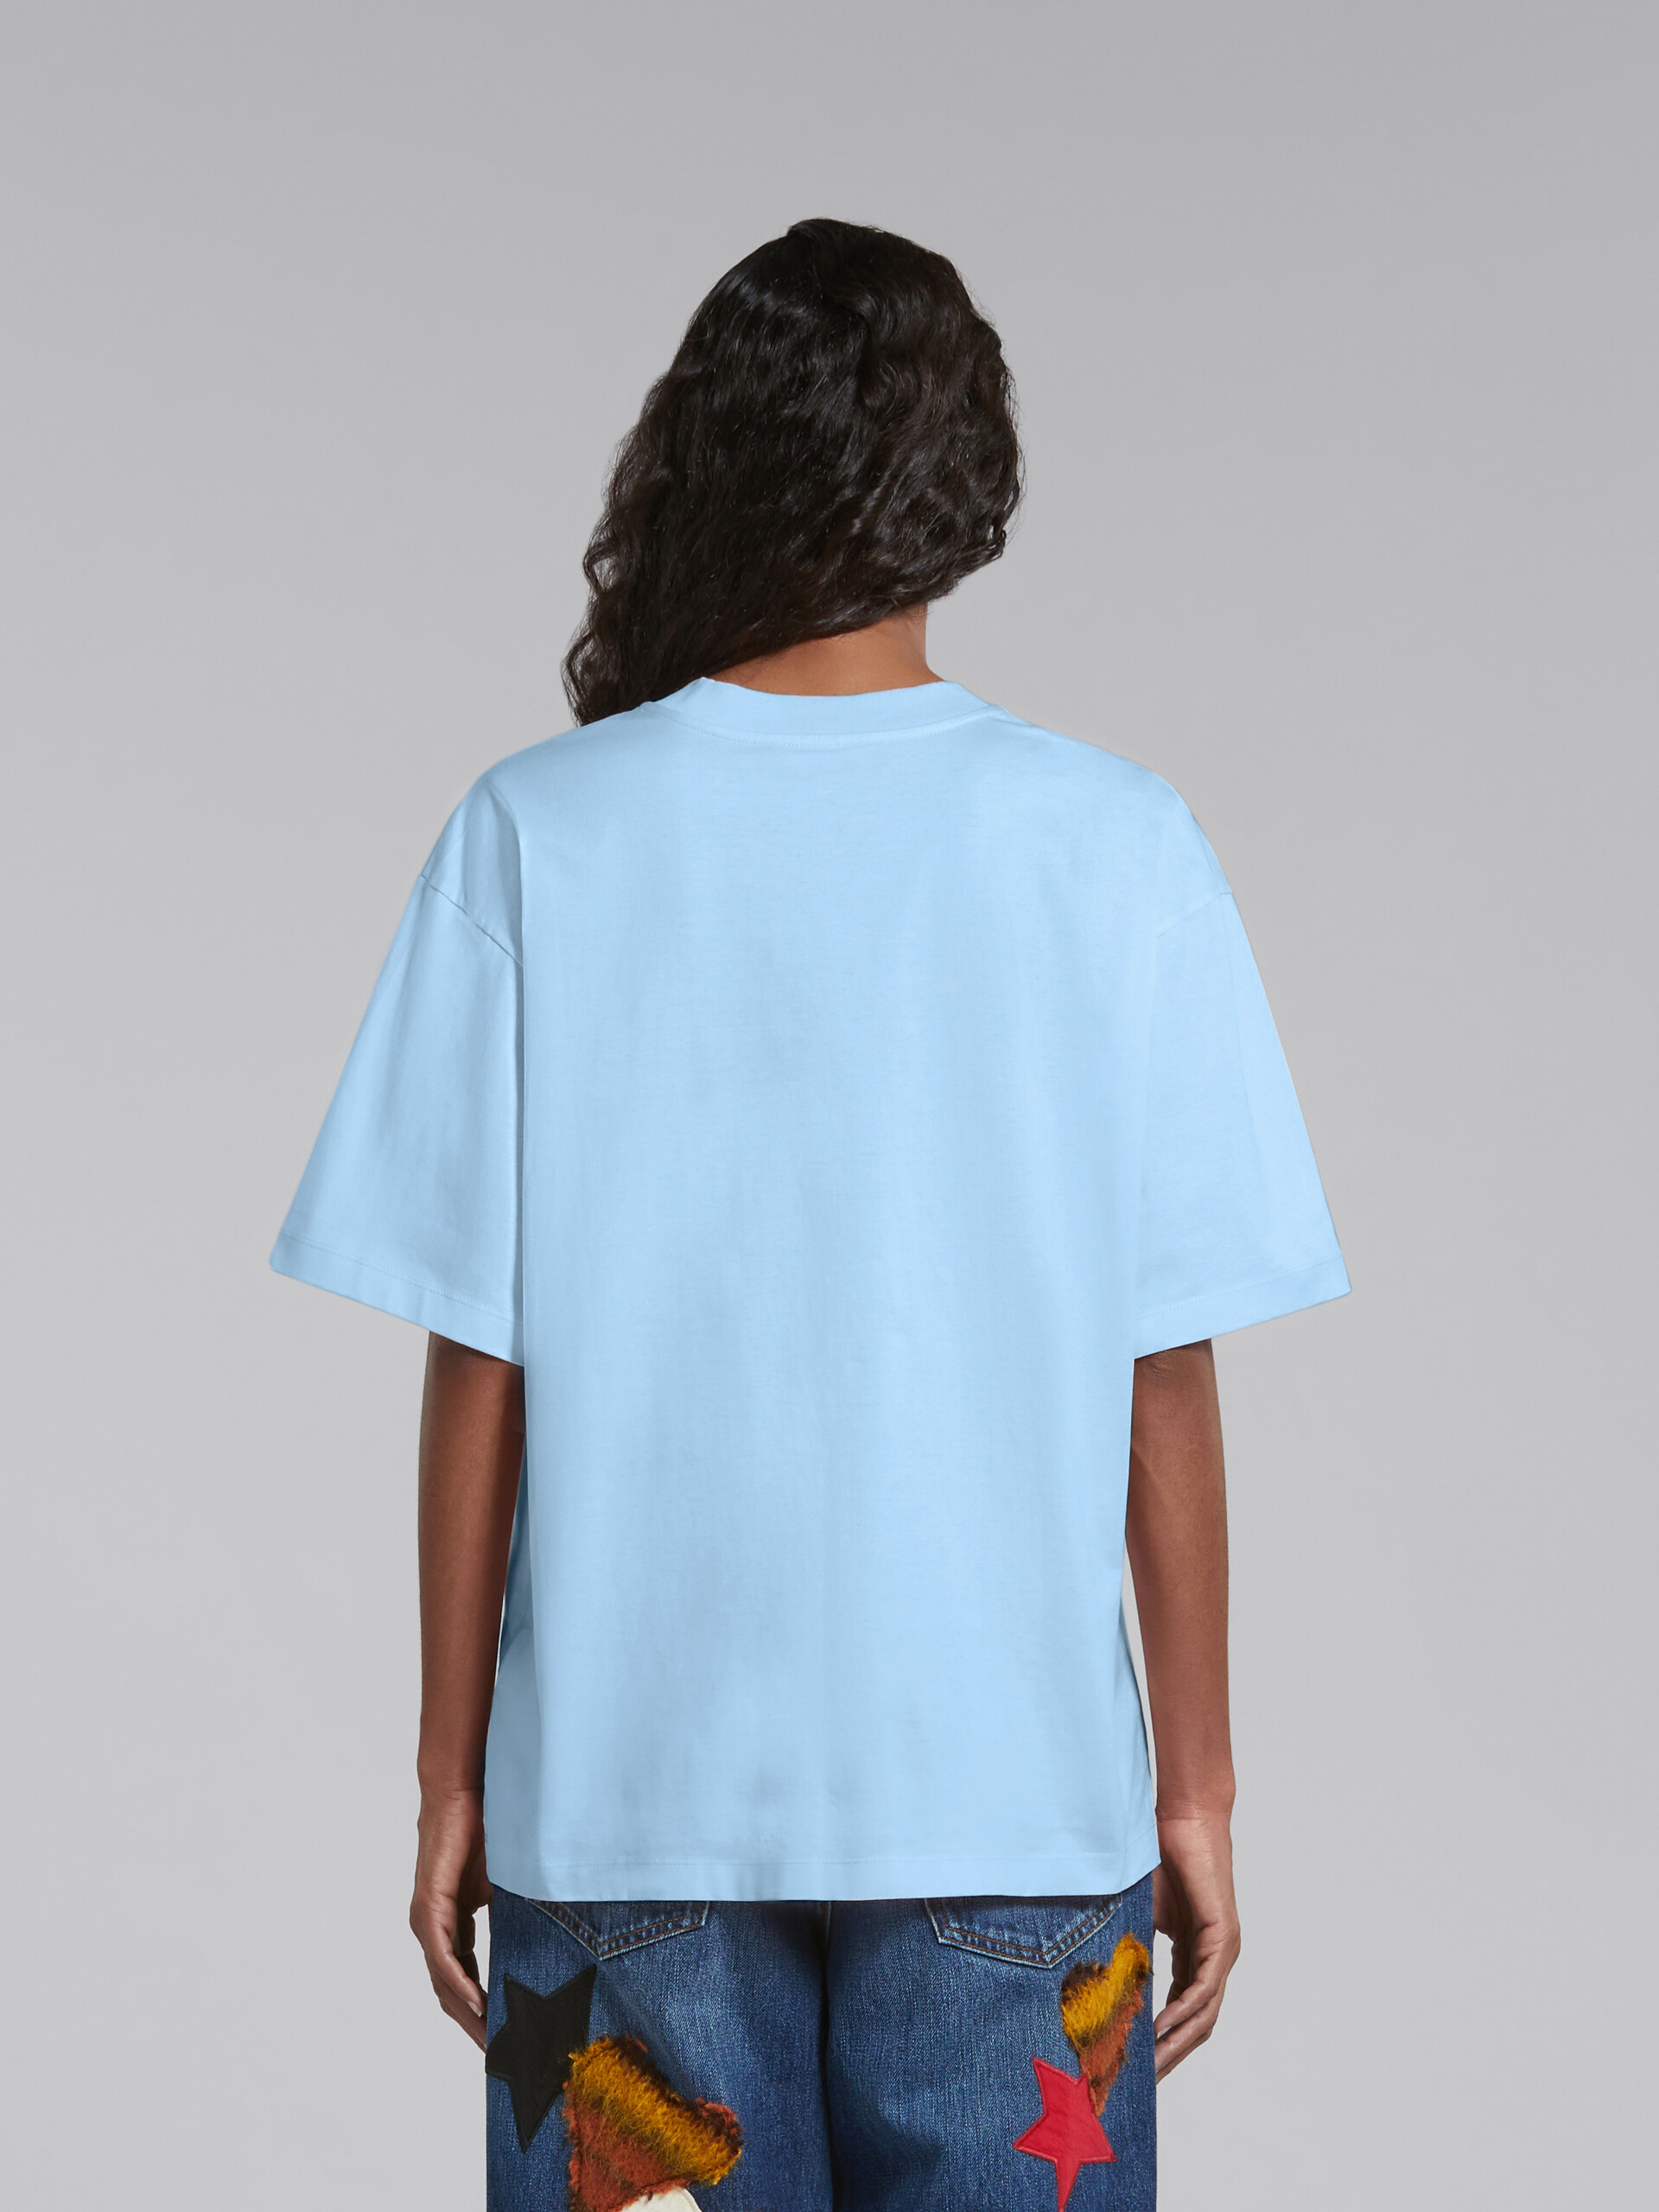 Blue organic cotton T-shirt with logo - T-shirts - Image 3